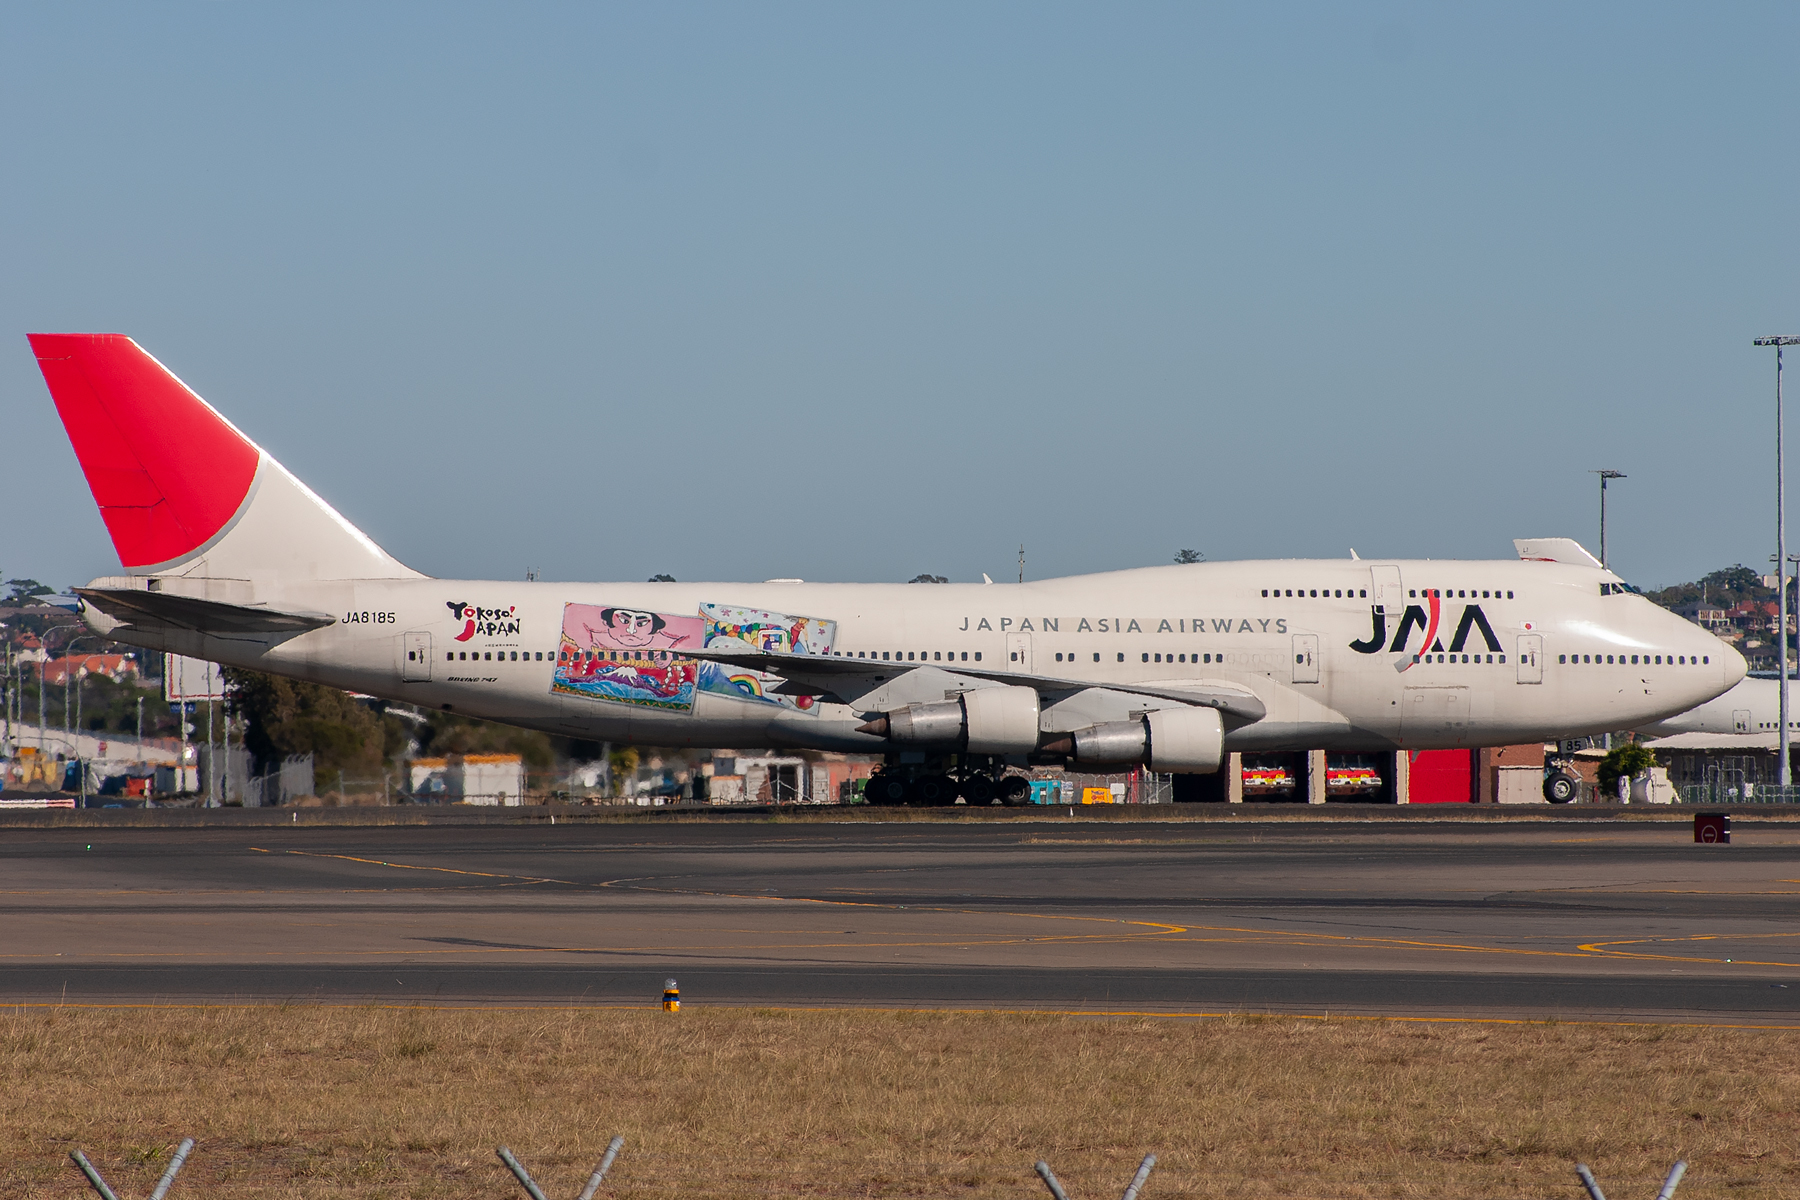 Japan Asia Airways Boeing 747-300 JA8185 at Kingsford Smith